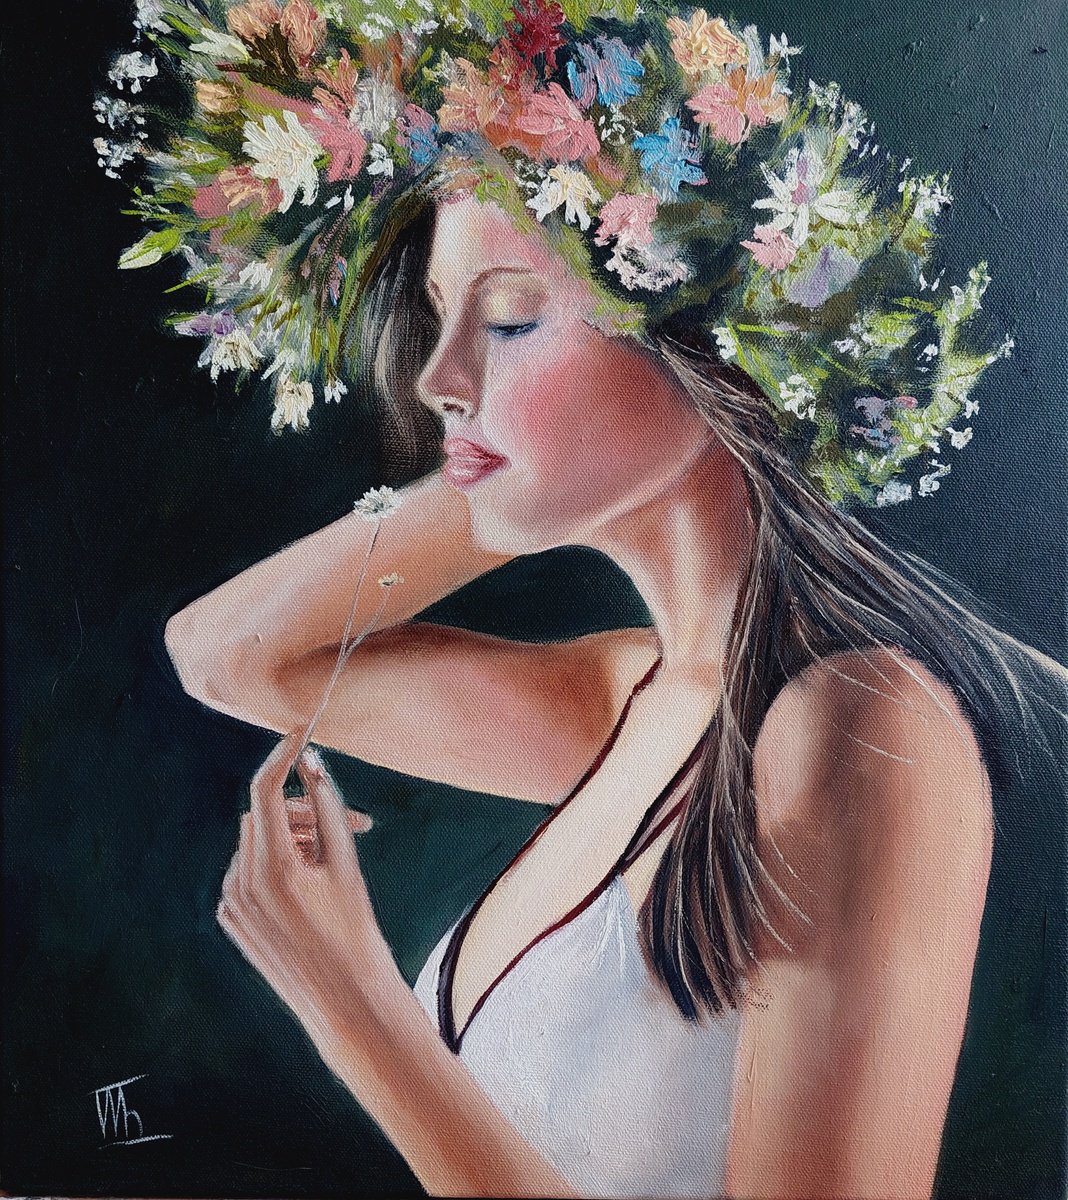 Summer Wreath of Flowers. Beauty of Woman # 9 by Ira Whittaker